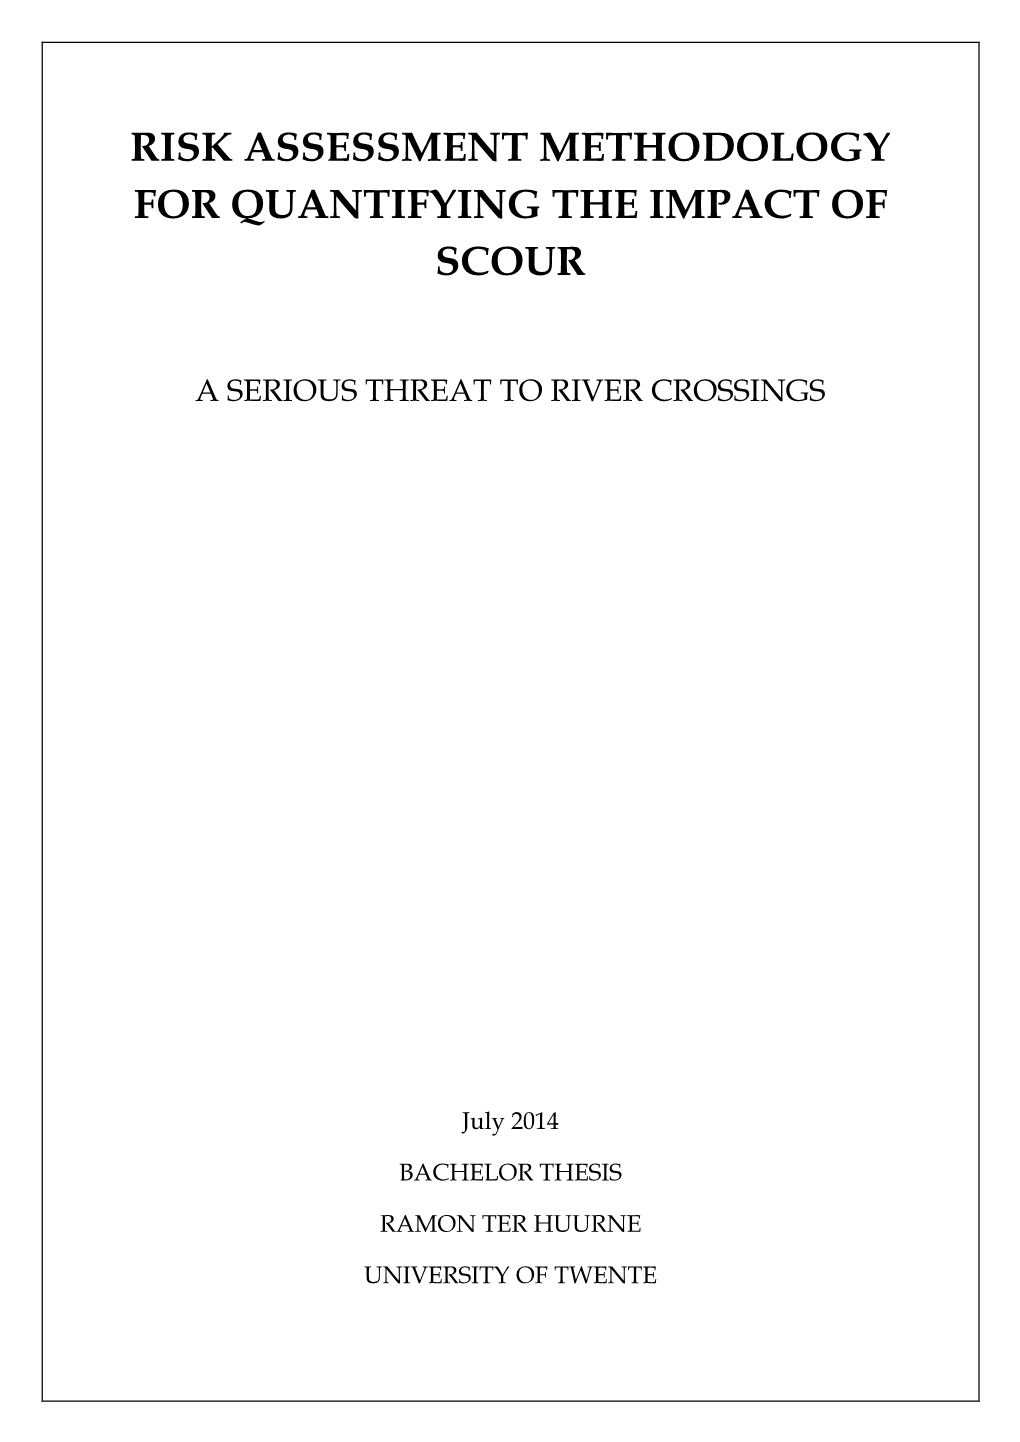 Risk Assessment Methodology for Quantifying the Impact of Scour